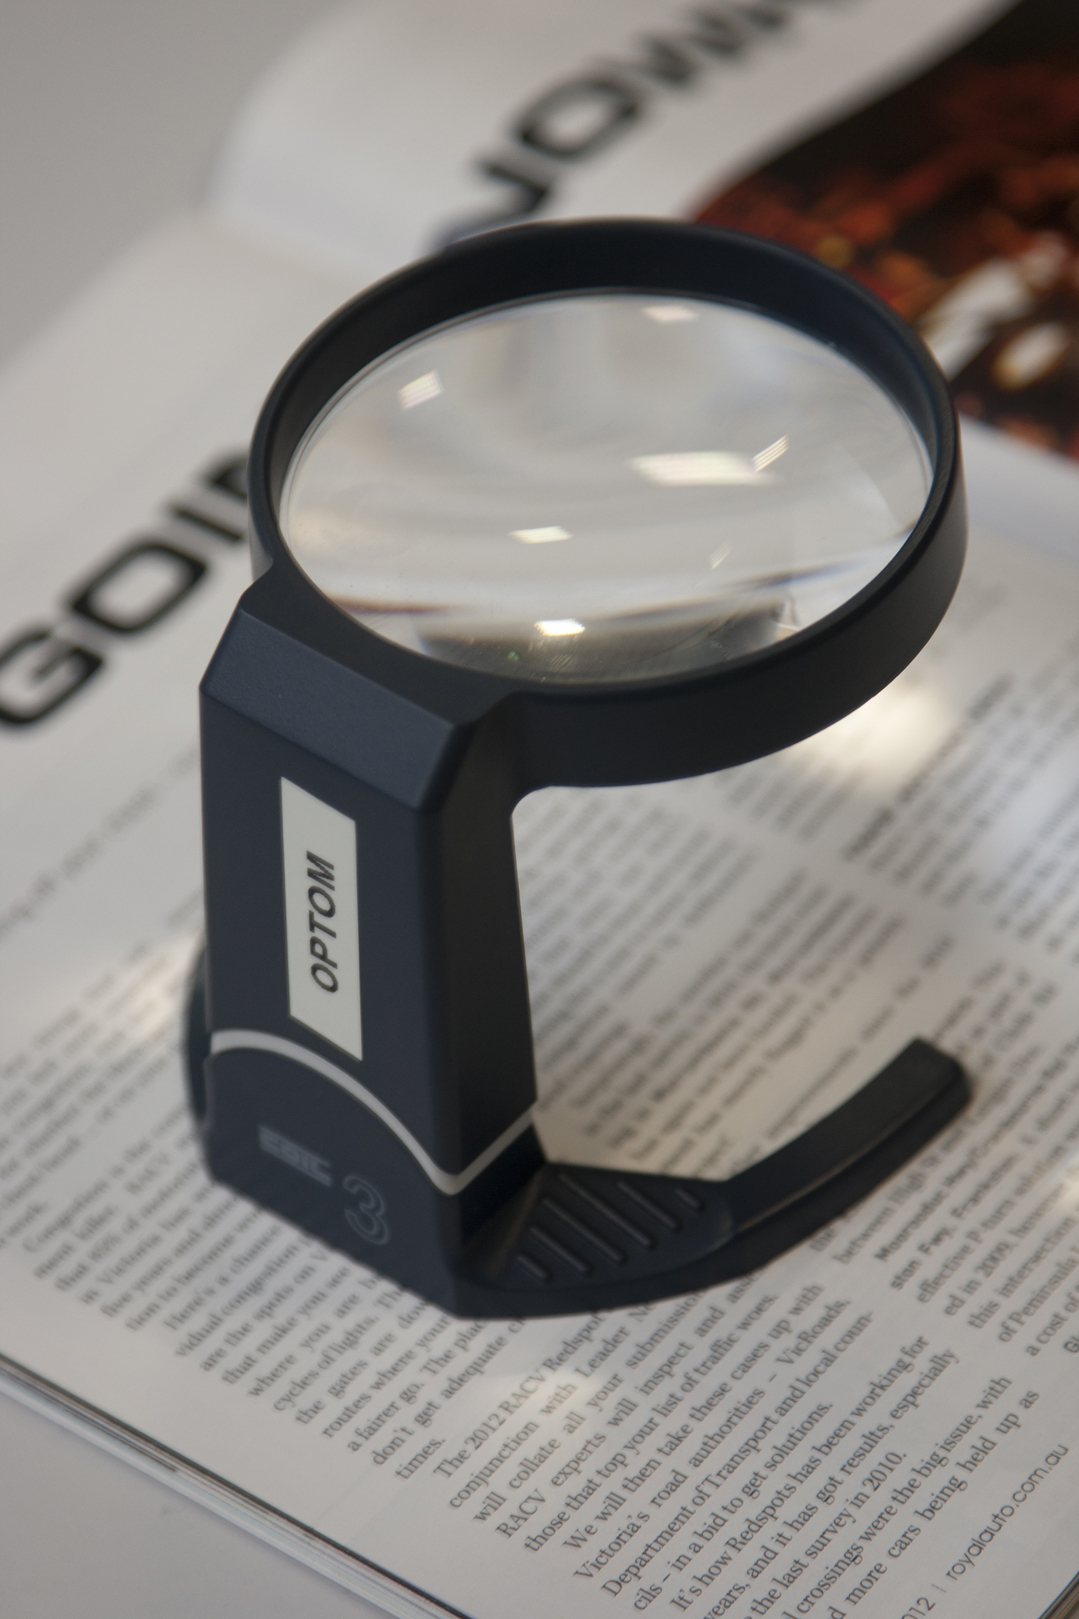 Non illuminated stand magnifier on a magazine